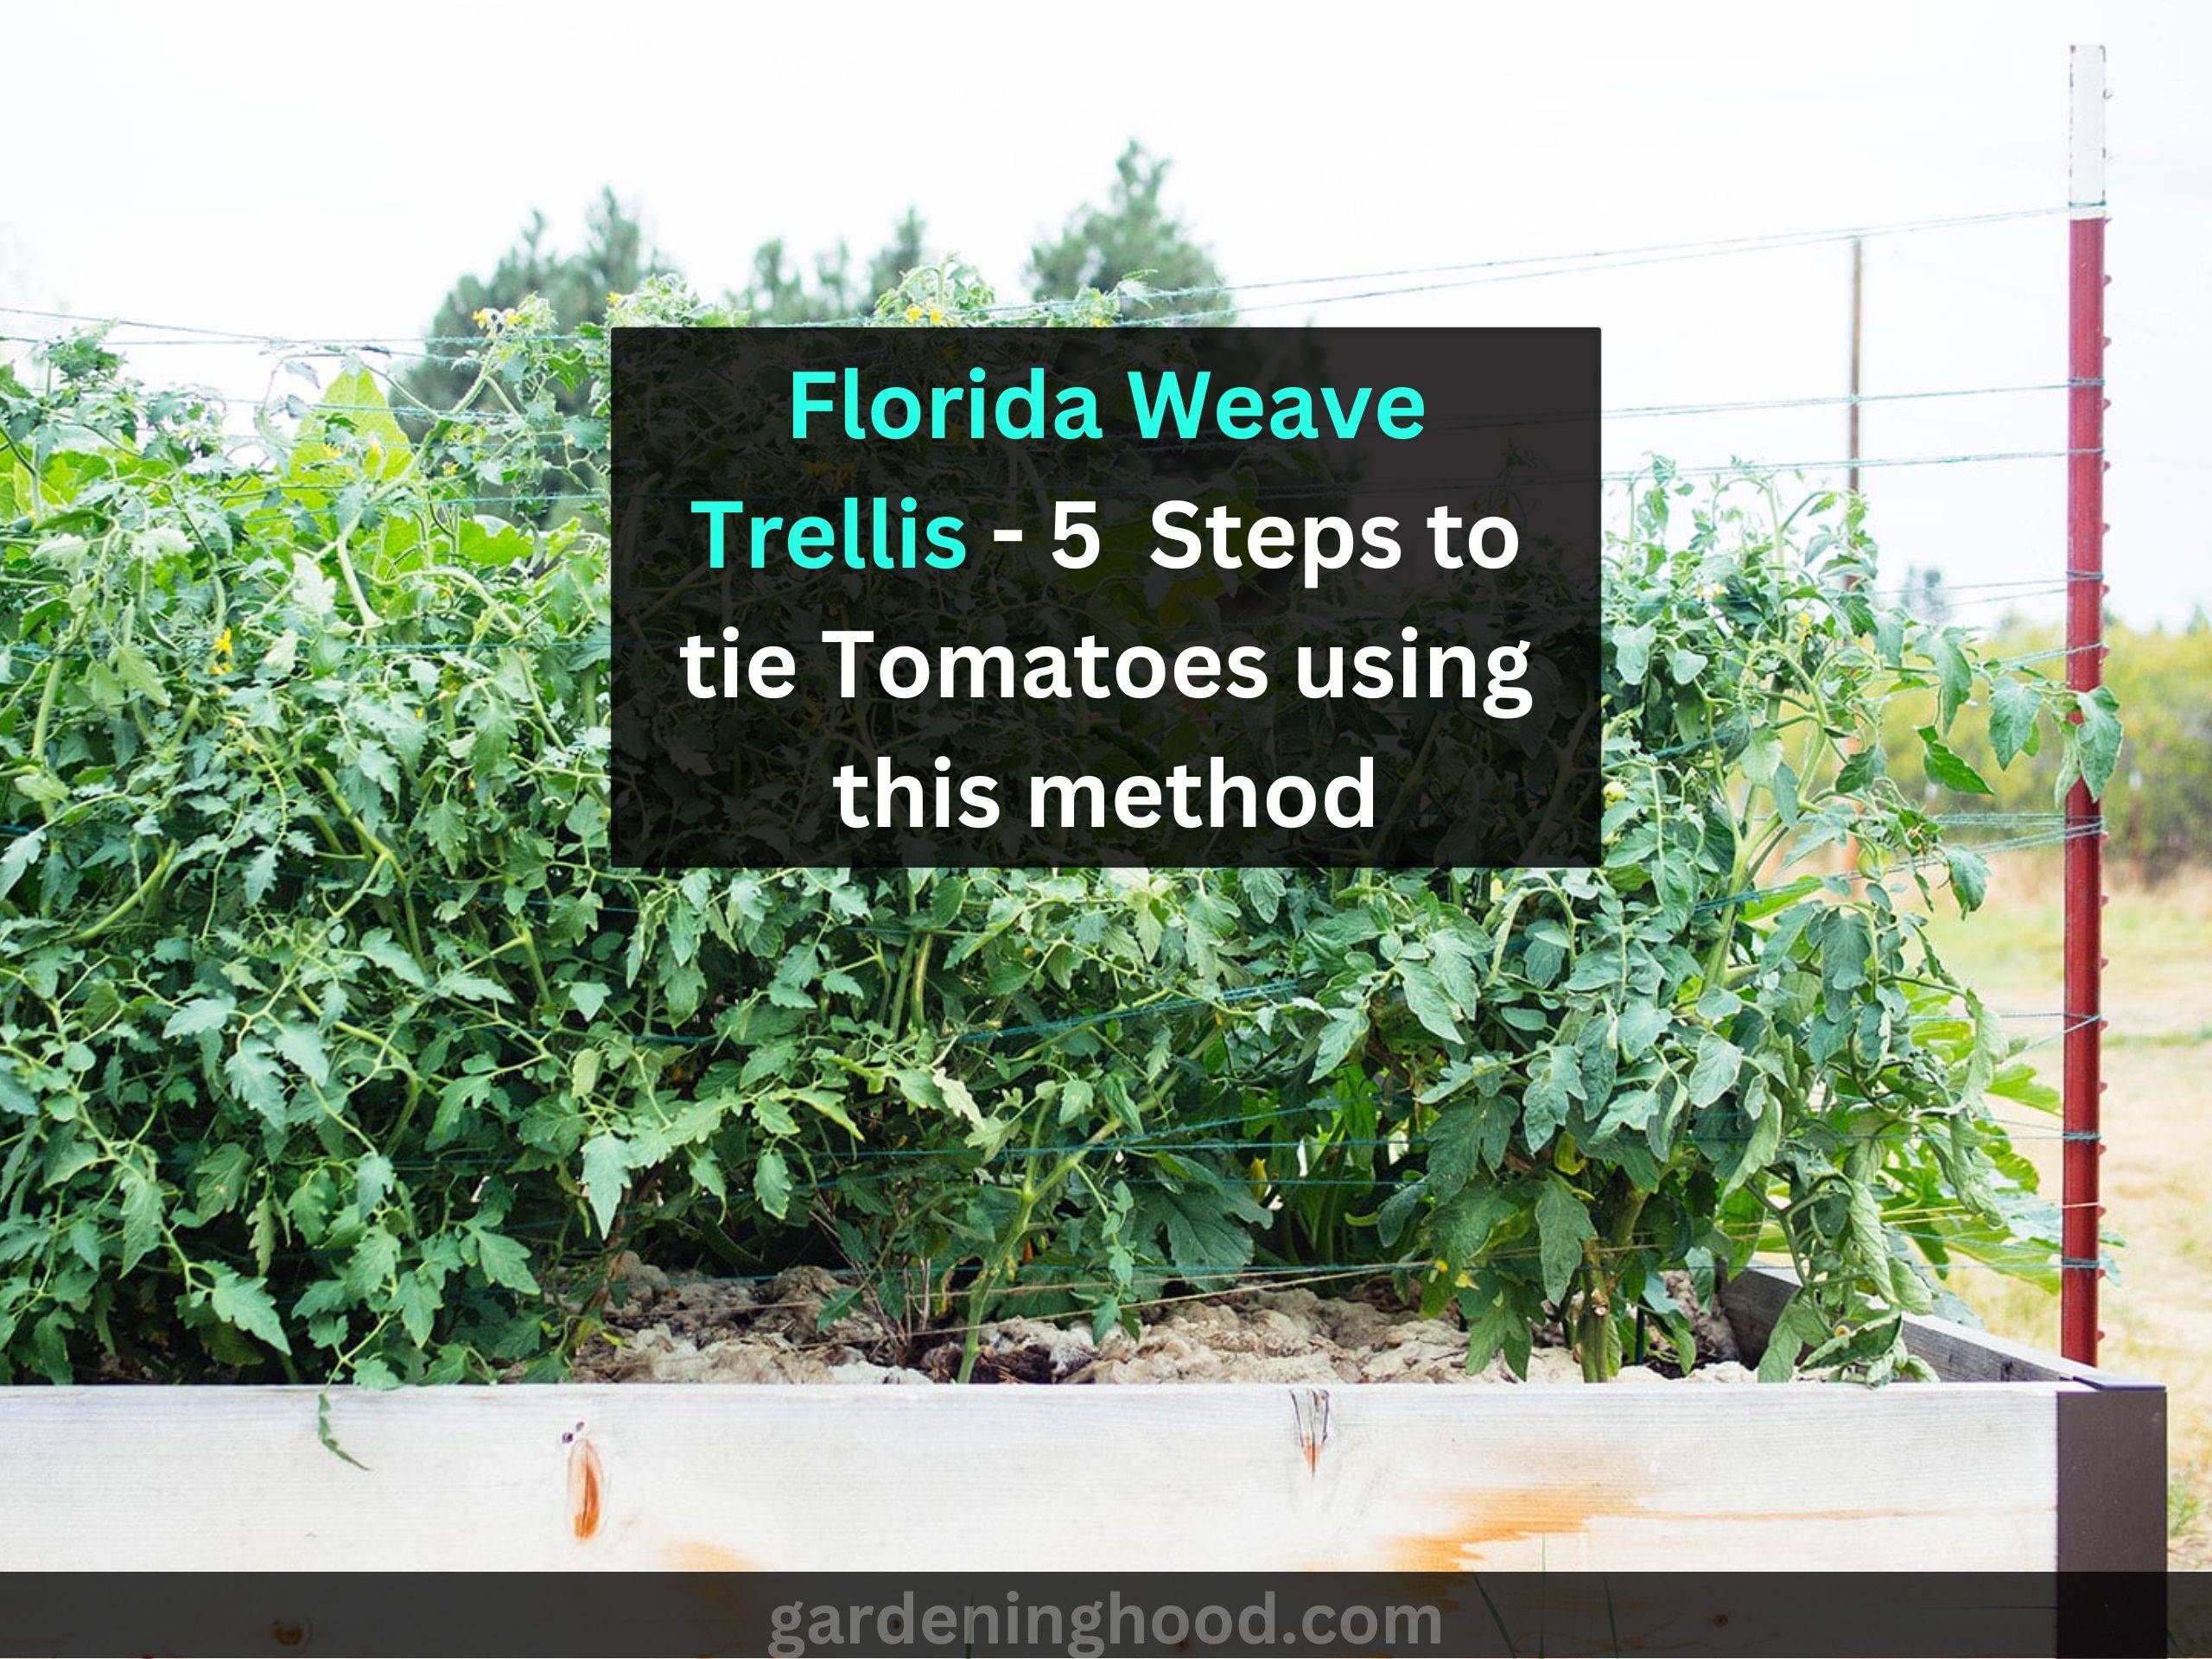 Florida Weave Trellis - 5+ Steps to tie Tomatoes using this method